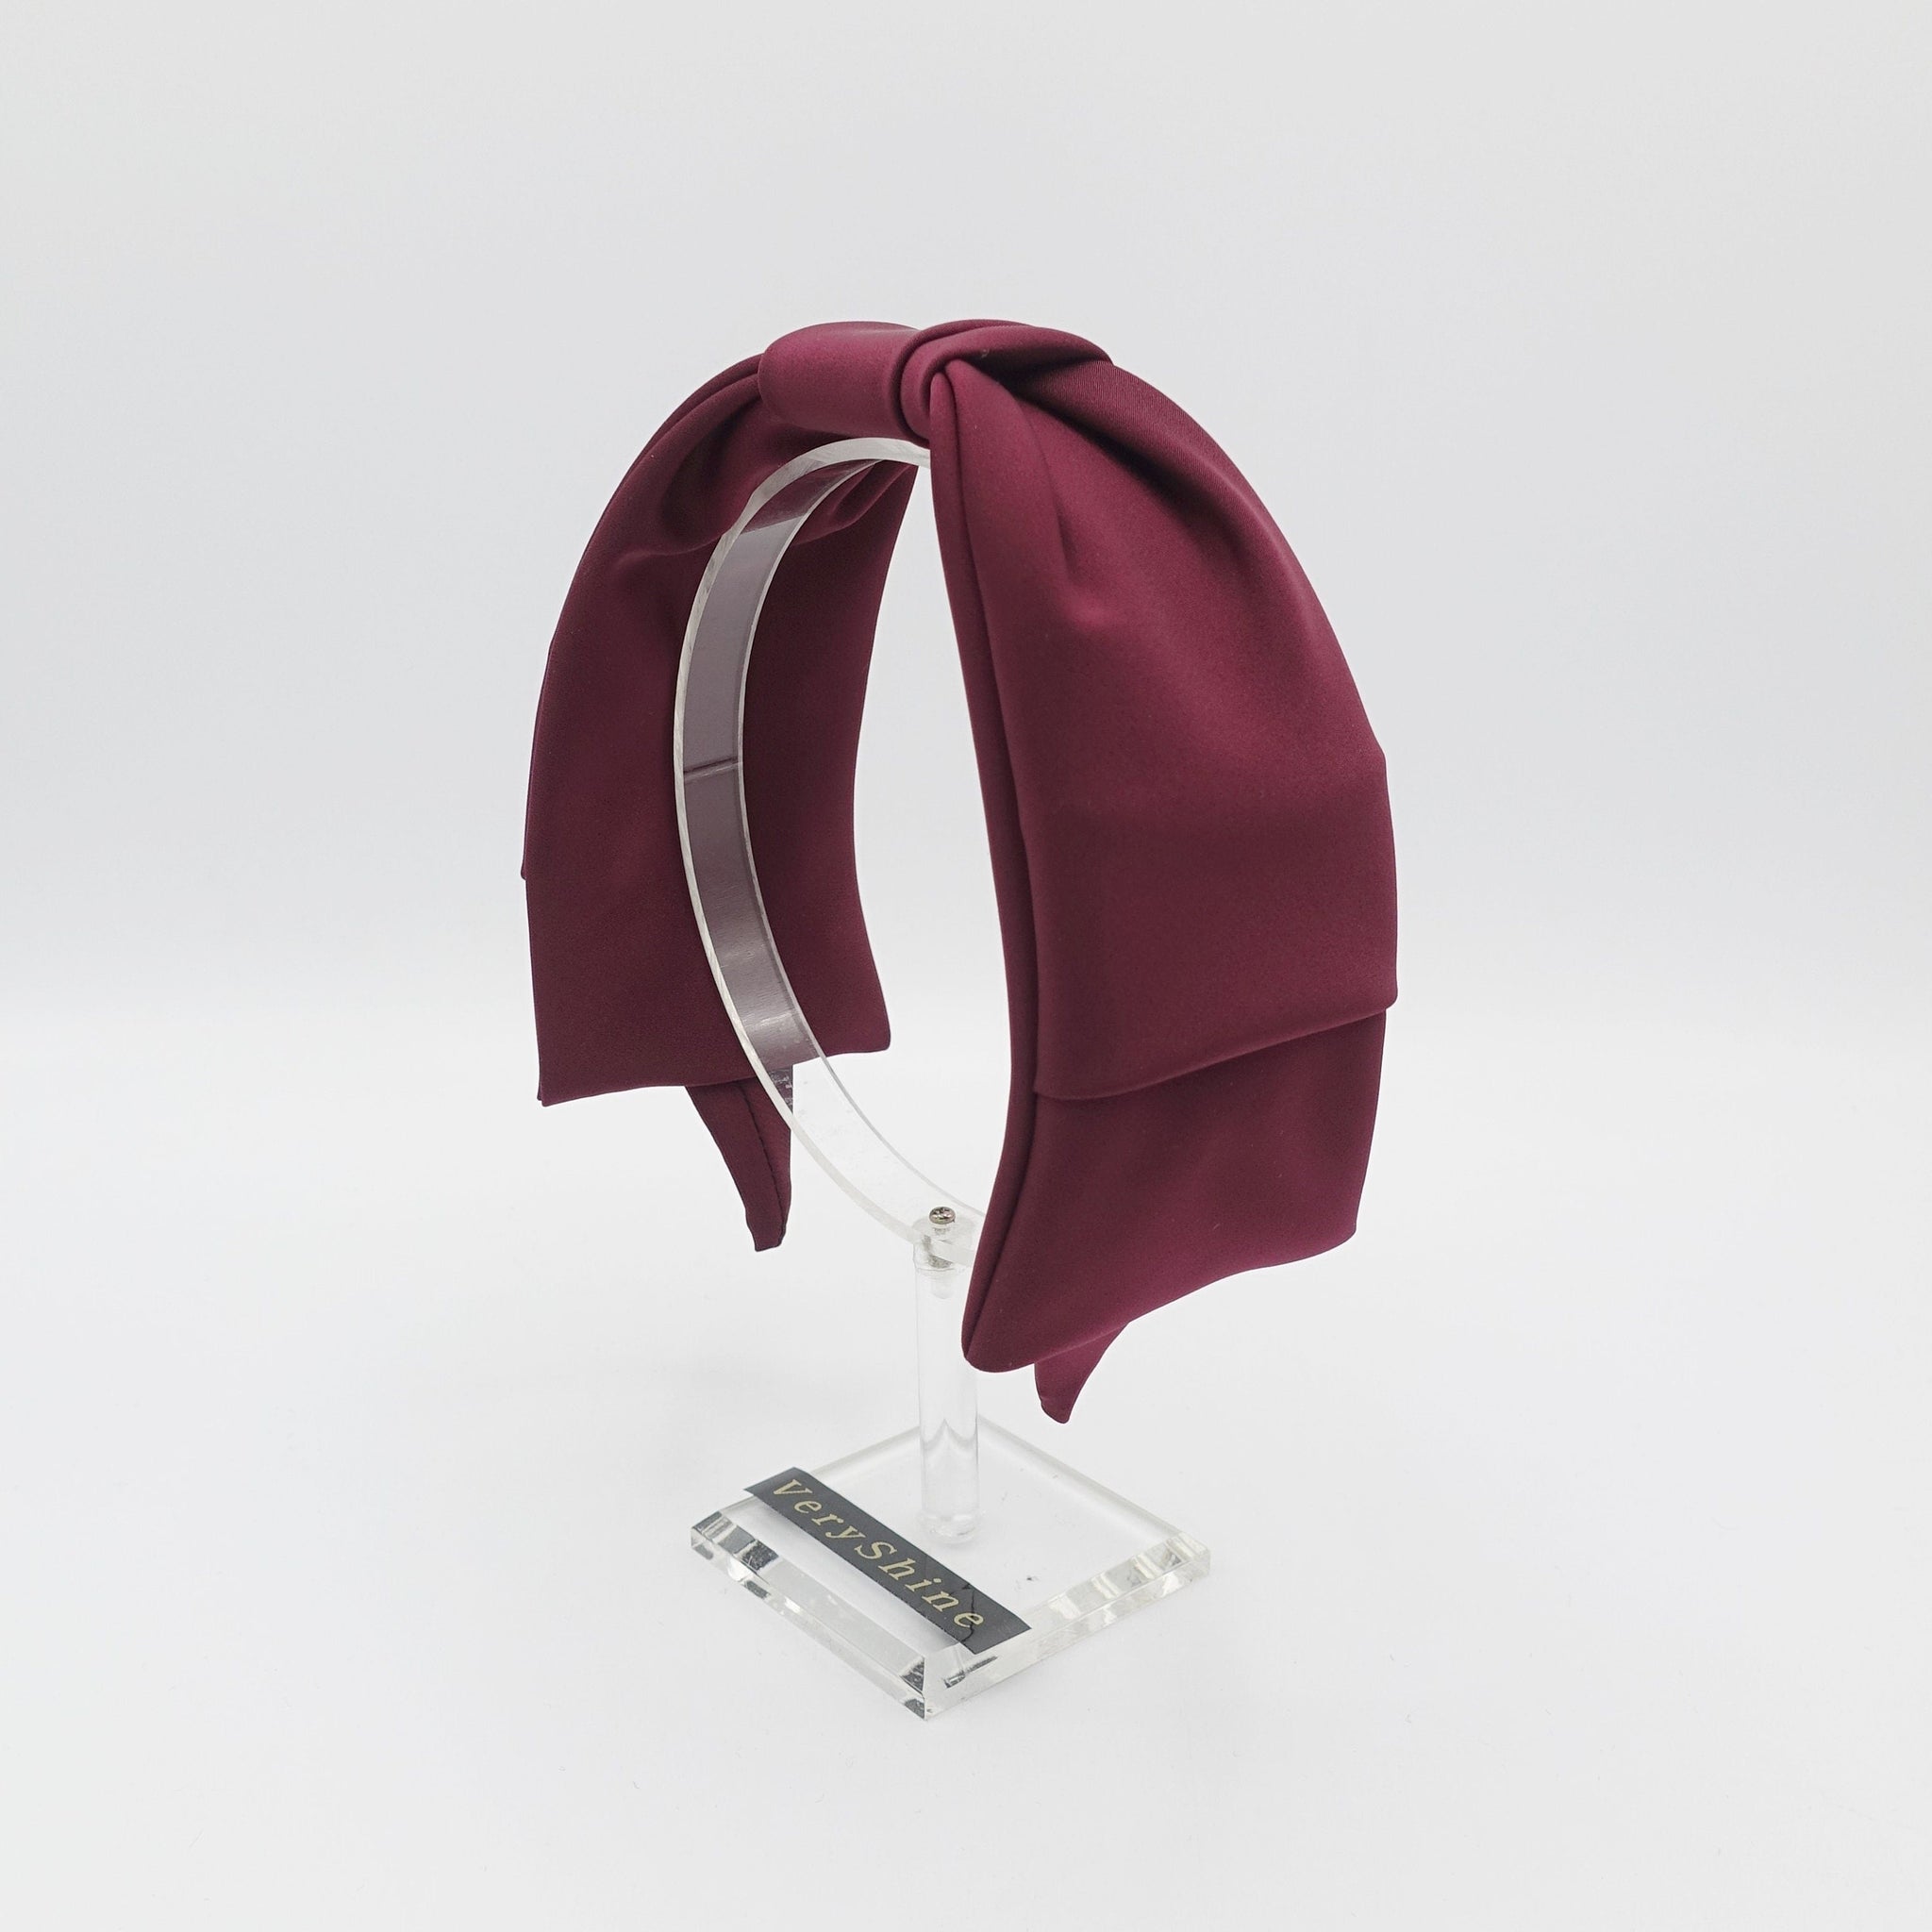 veryshine.com Headband Red wine solid satin bow tie headband formal hair accessory for women